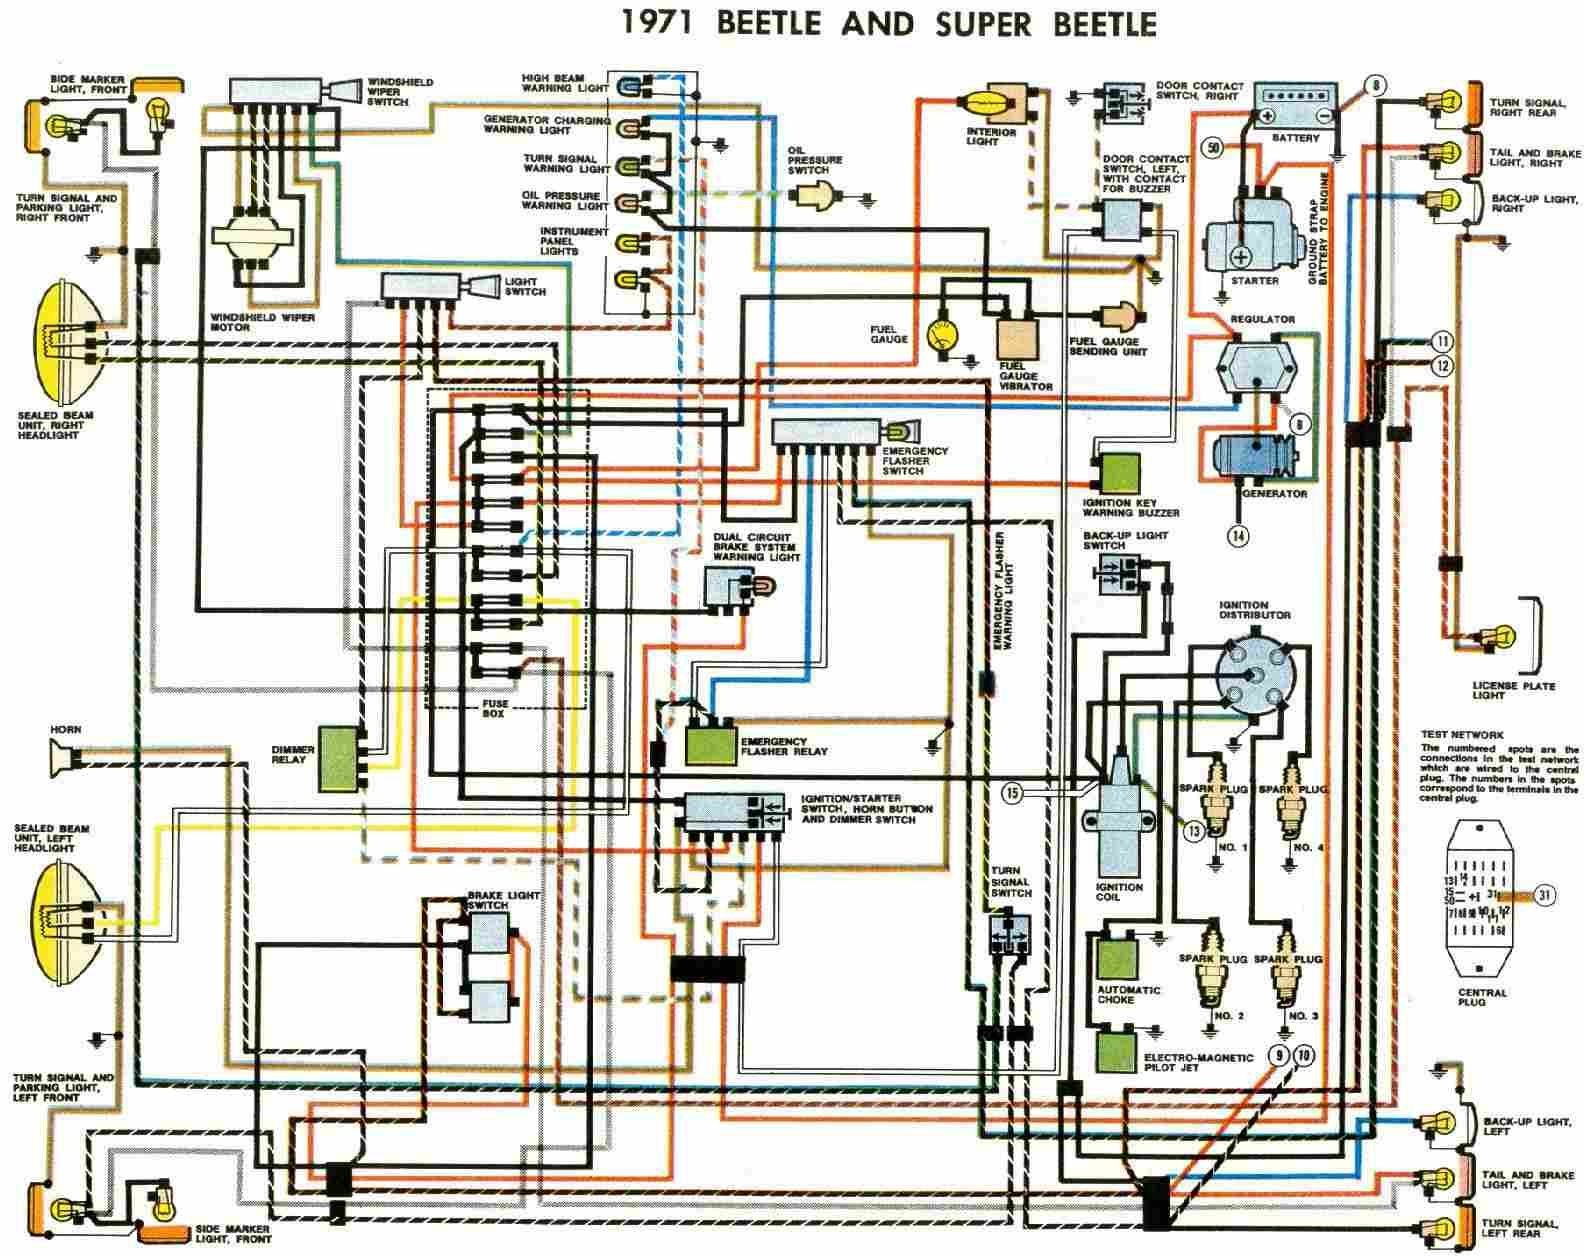 Vw Engine Diagram Vw Beetle Wiring Ch A Simple Car Bugs Pinterest Of Vw Engine Diagram